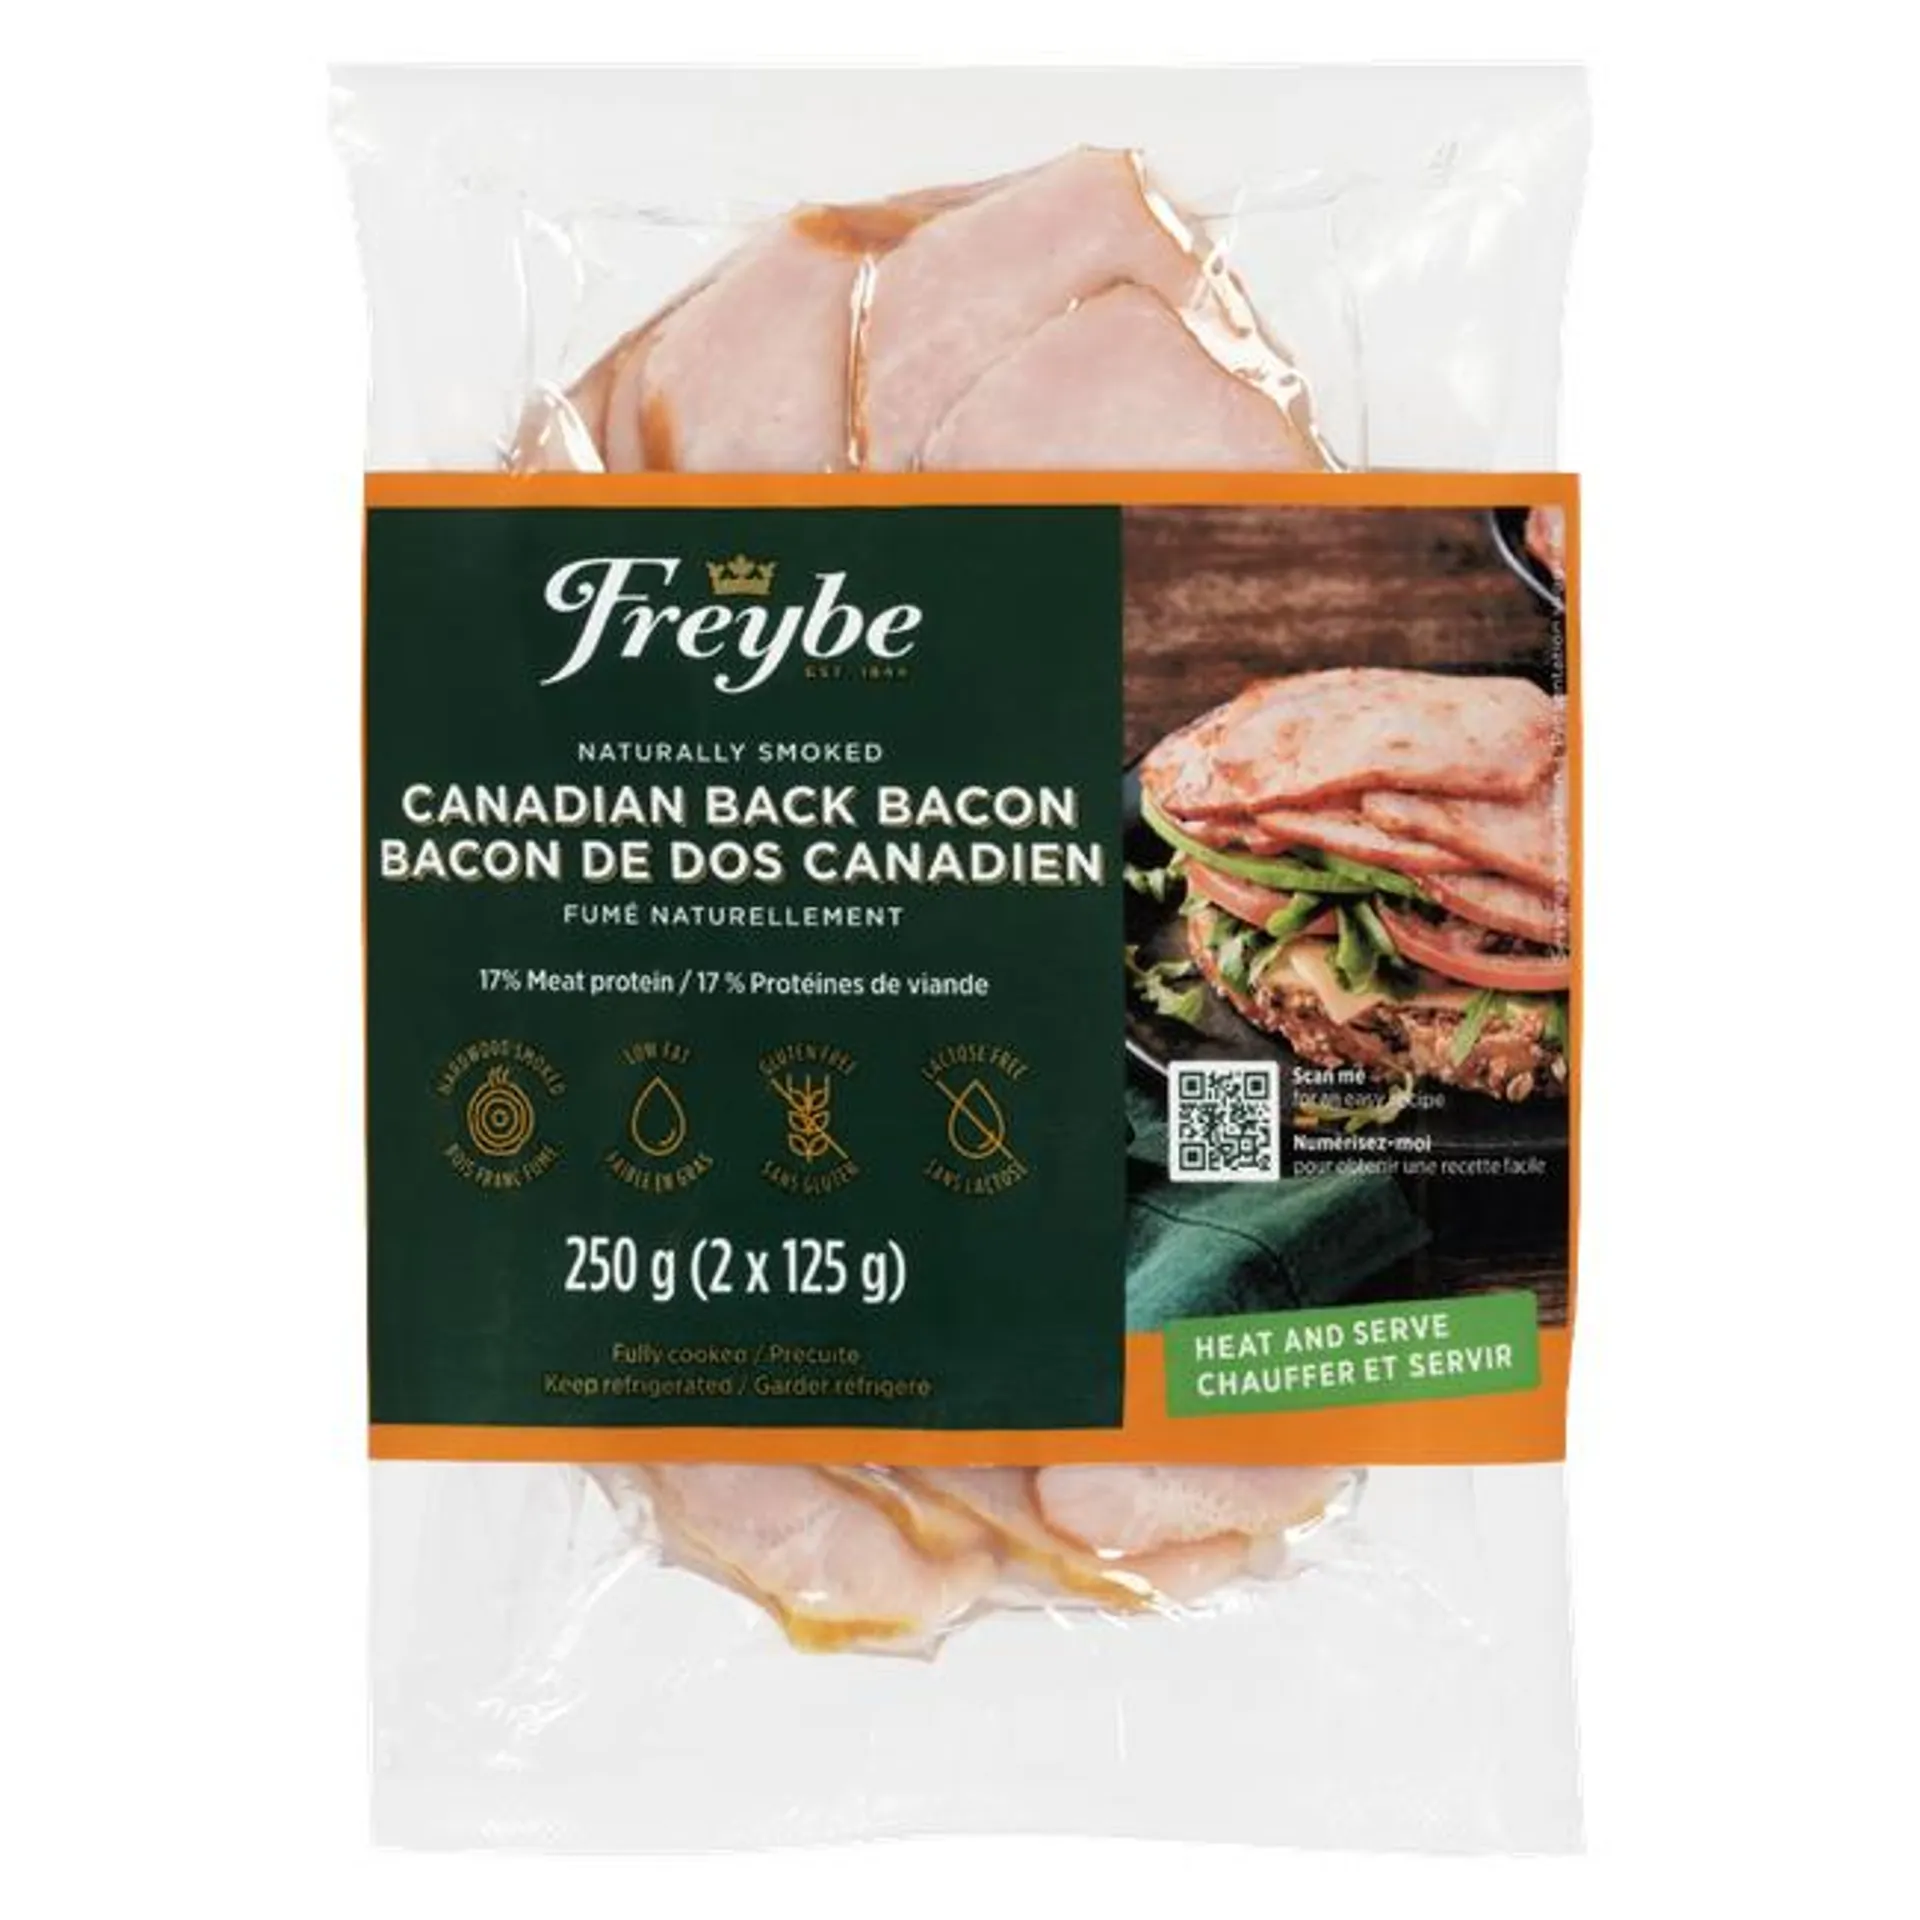 Freybe - Canadian Back Bacon